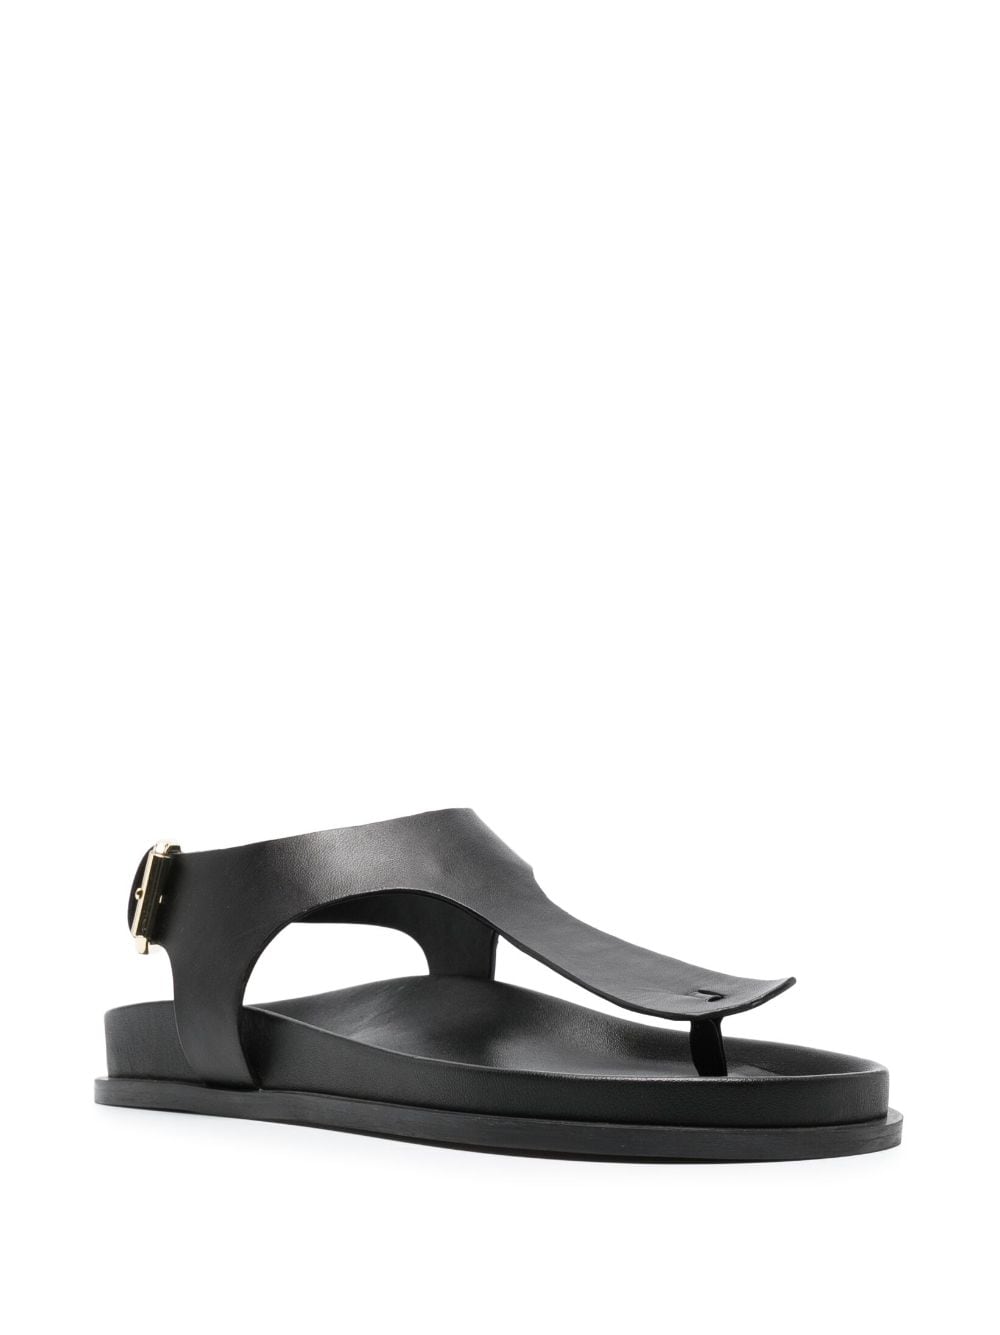 A.EMERY Reema leather flat sandals - Zwart